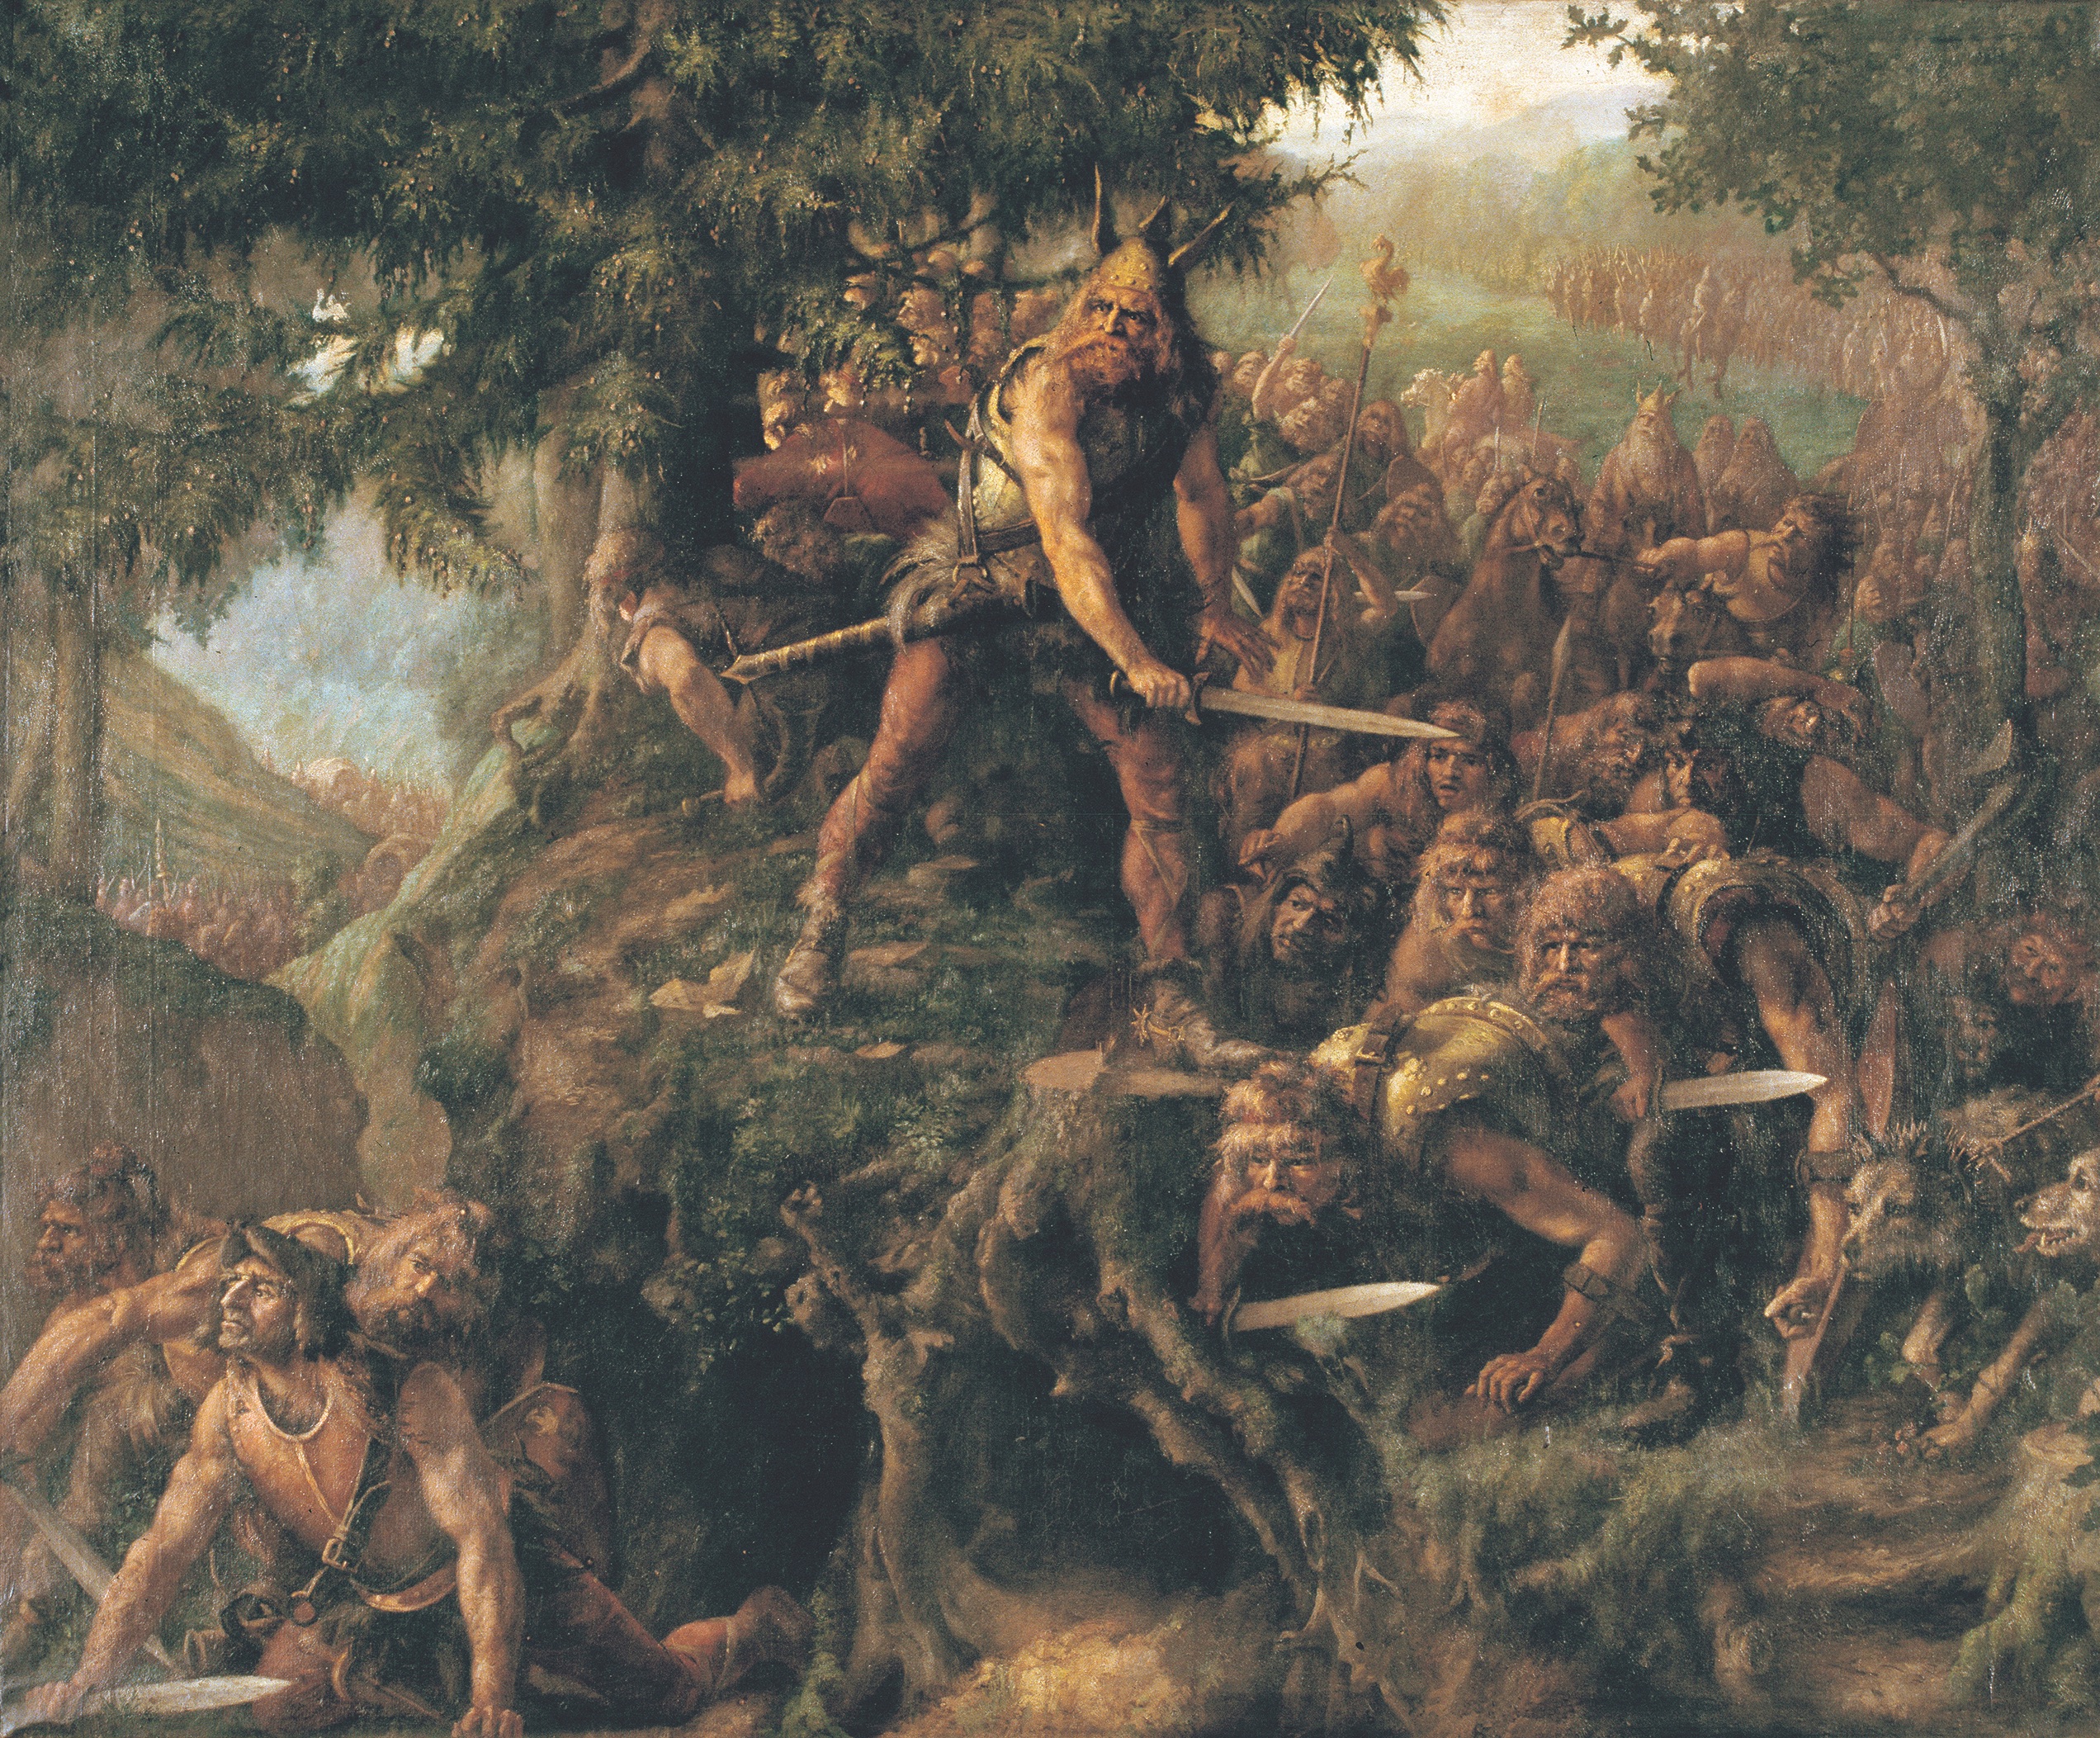 Gallic warriors repulse Roman troops in this fanciful 1894 work. (Musée Des Beaux-Arts De Carcassonne) 